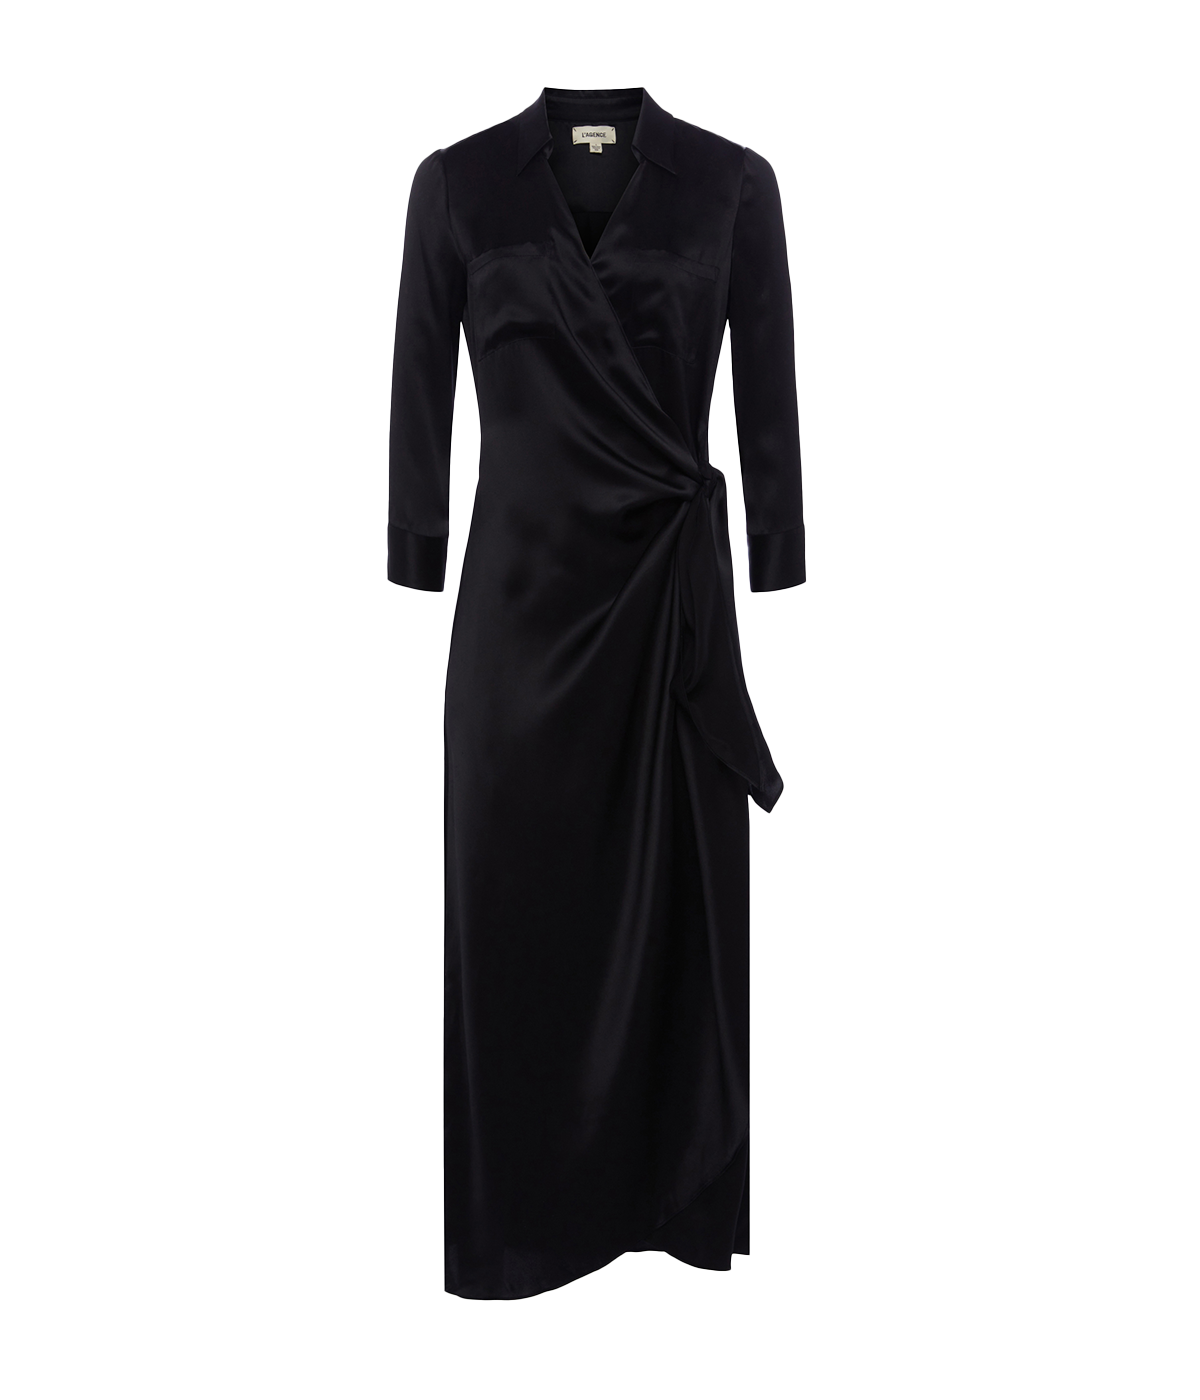 Kadi Long Wrap Dress in Black